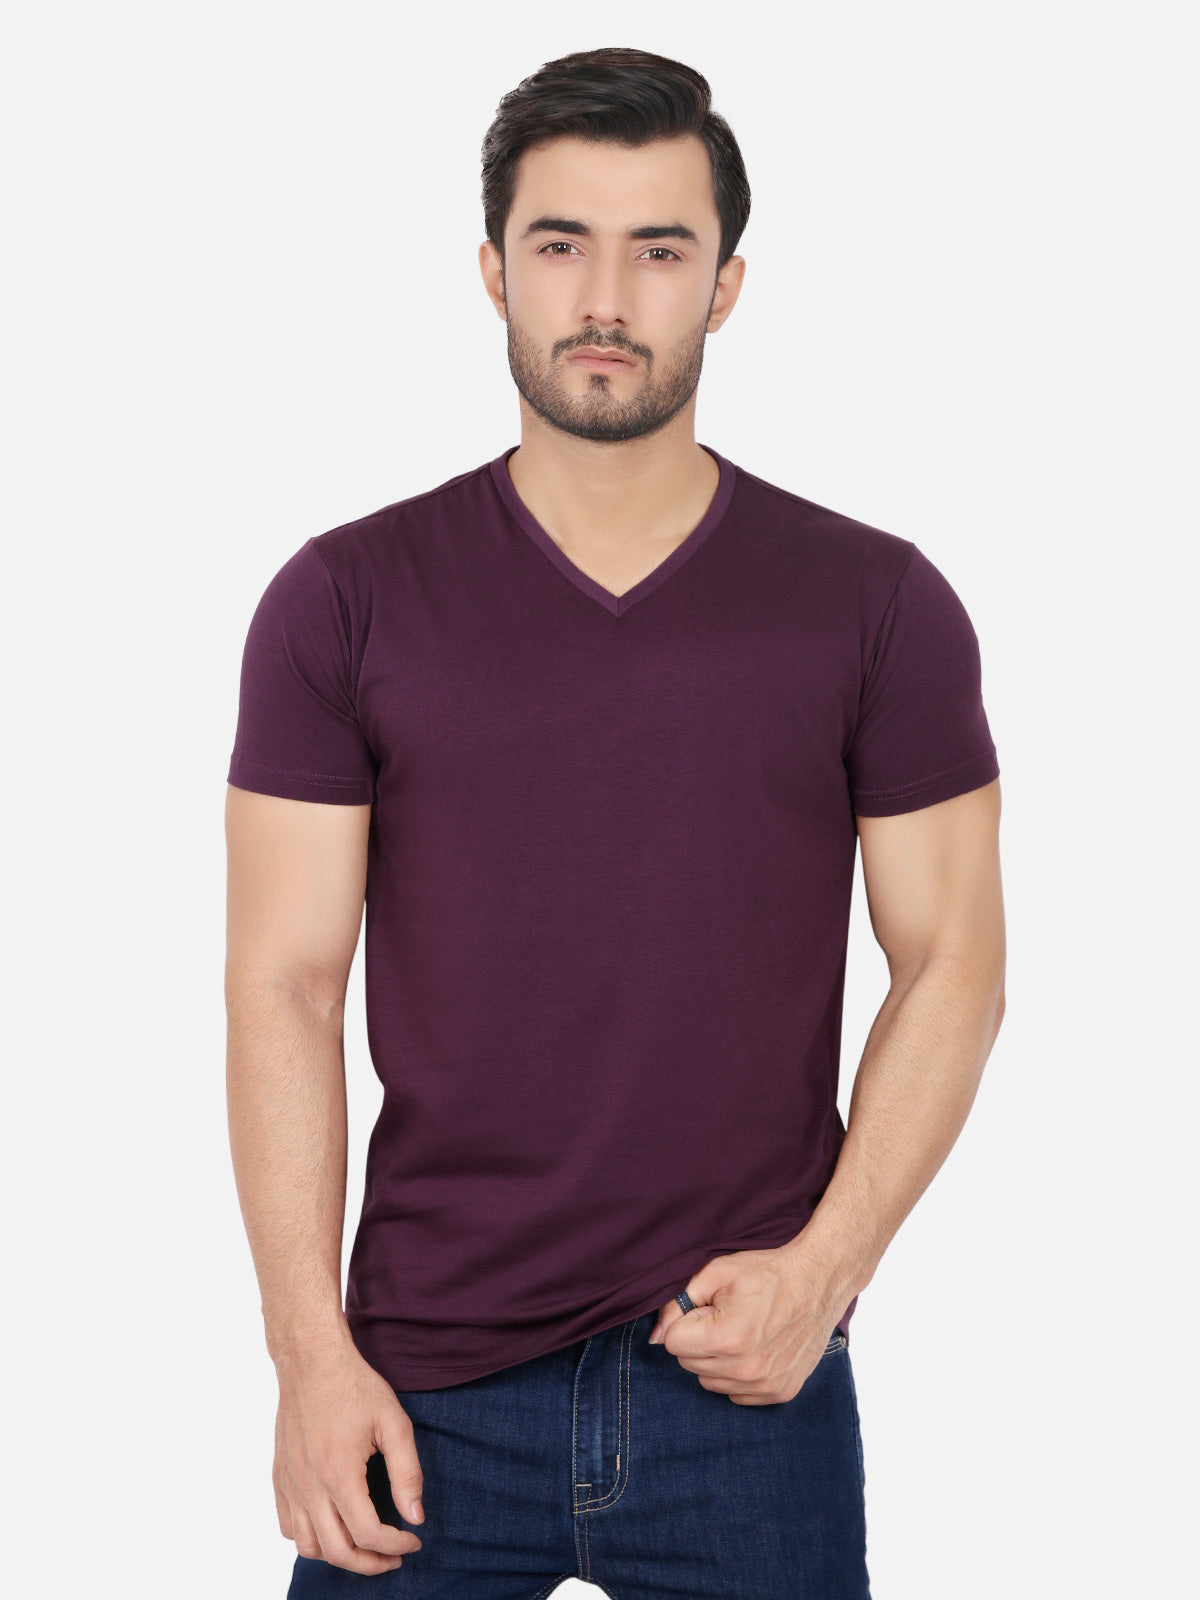 Men's Purple Basic T-Shirt - FMTBT19-067